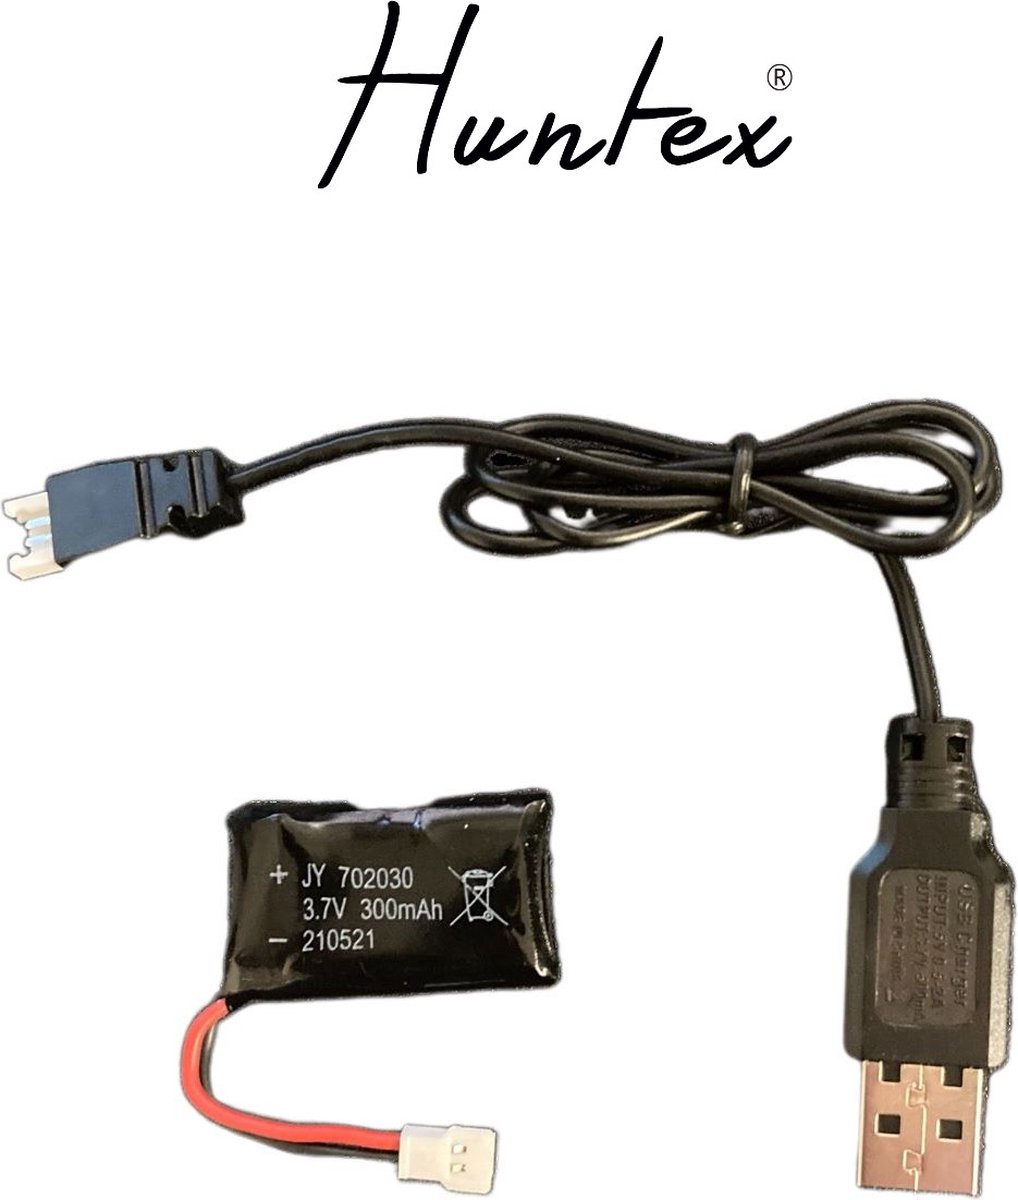 Huntex 3.7V 300Mah Lipo Batterij + USB-Oplaadkabel - Voor FQ777 FQ17WUdi U816 U830 F180 E55 Hubsan H107 Syma X11C FY530 FX 801 FX 651 - Rc Drone - Rc Vliegtuig - Rc Auto